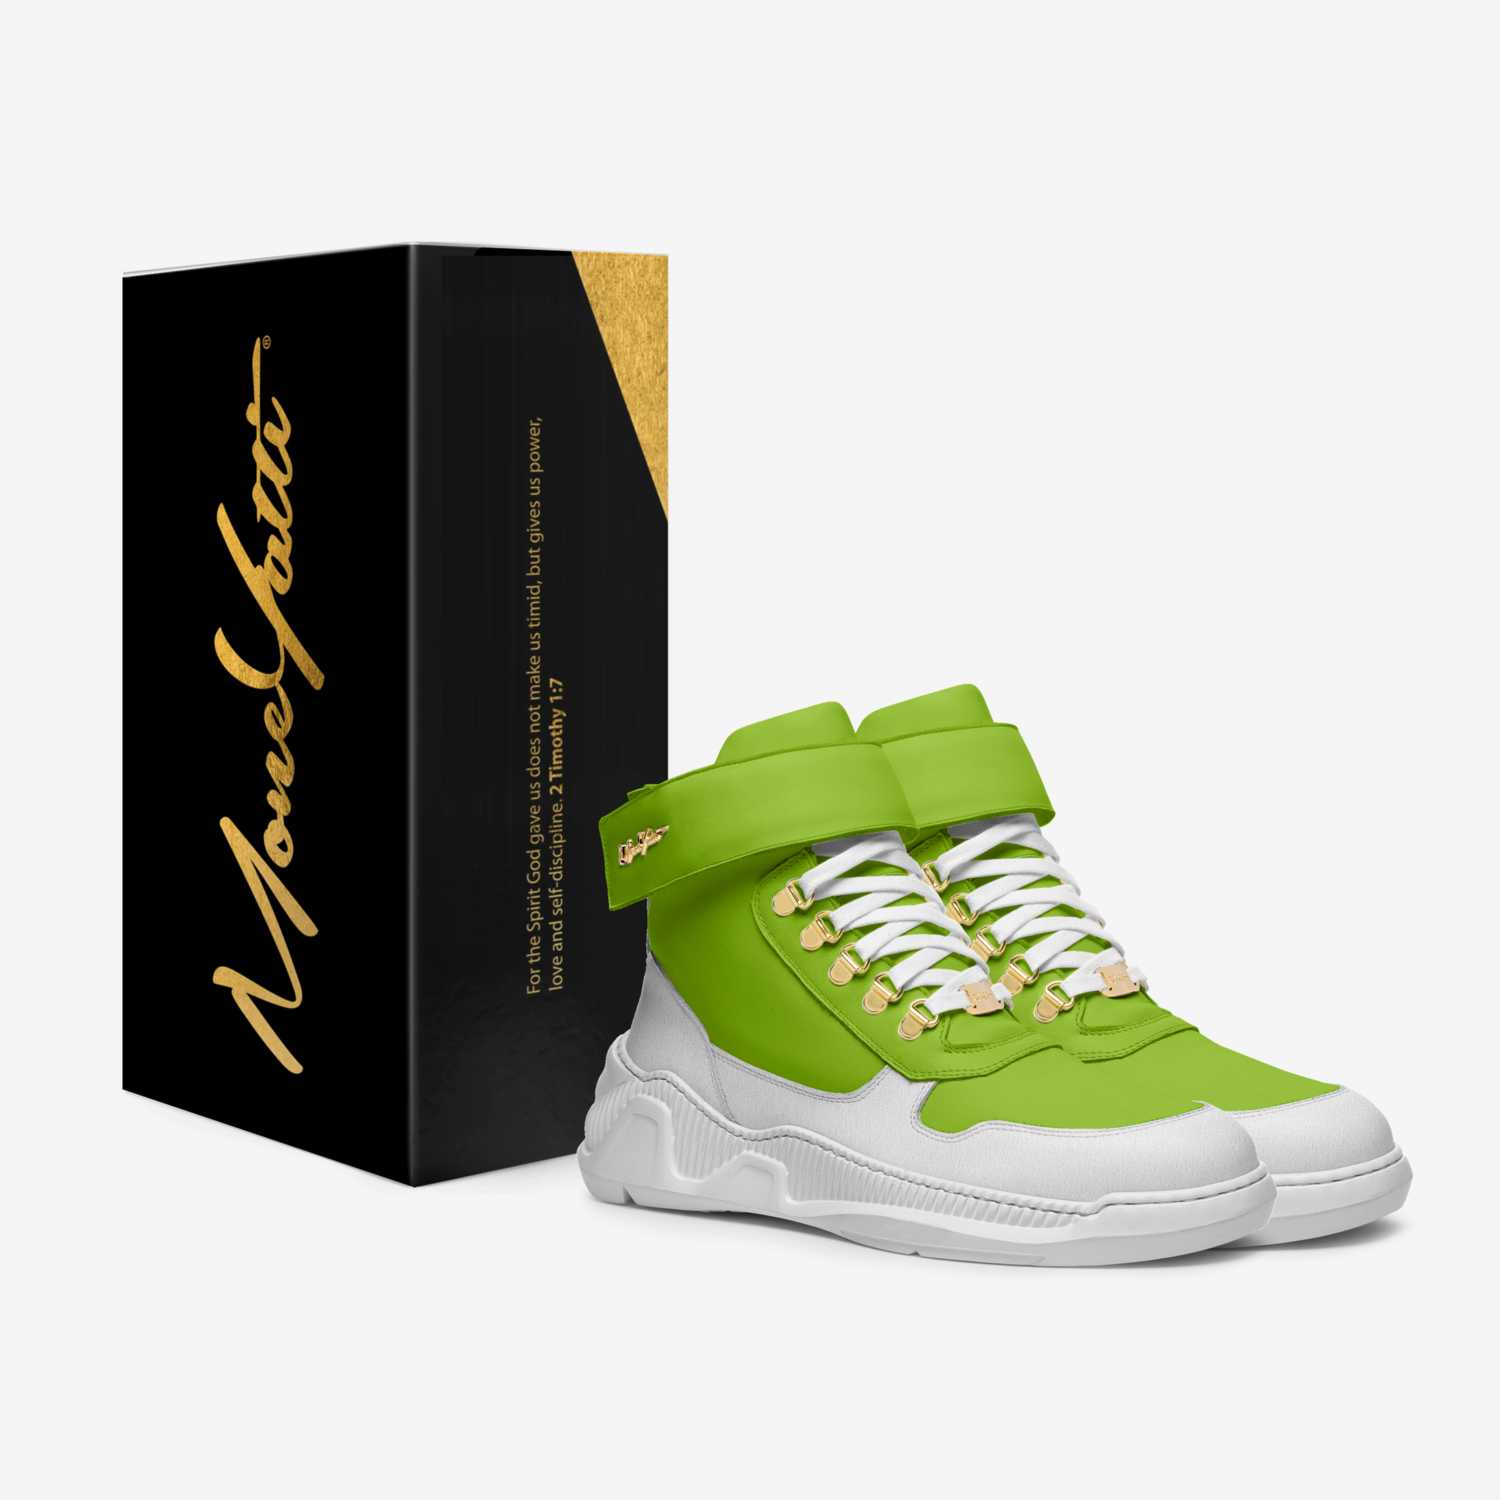 Moneyatti Traps14 custom made in Italy shoes by Moneyatti Brand | Box view